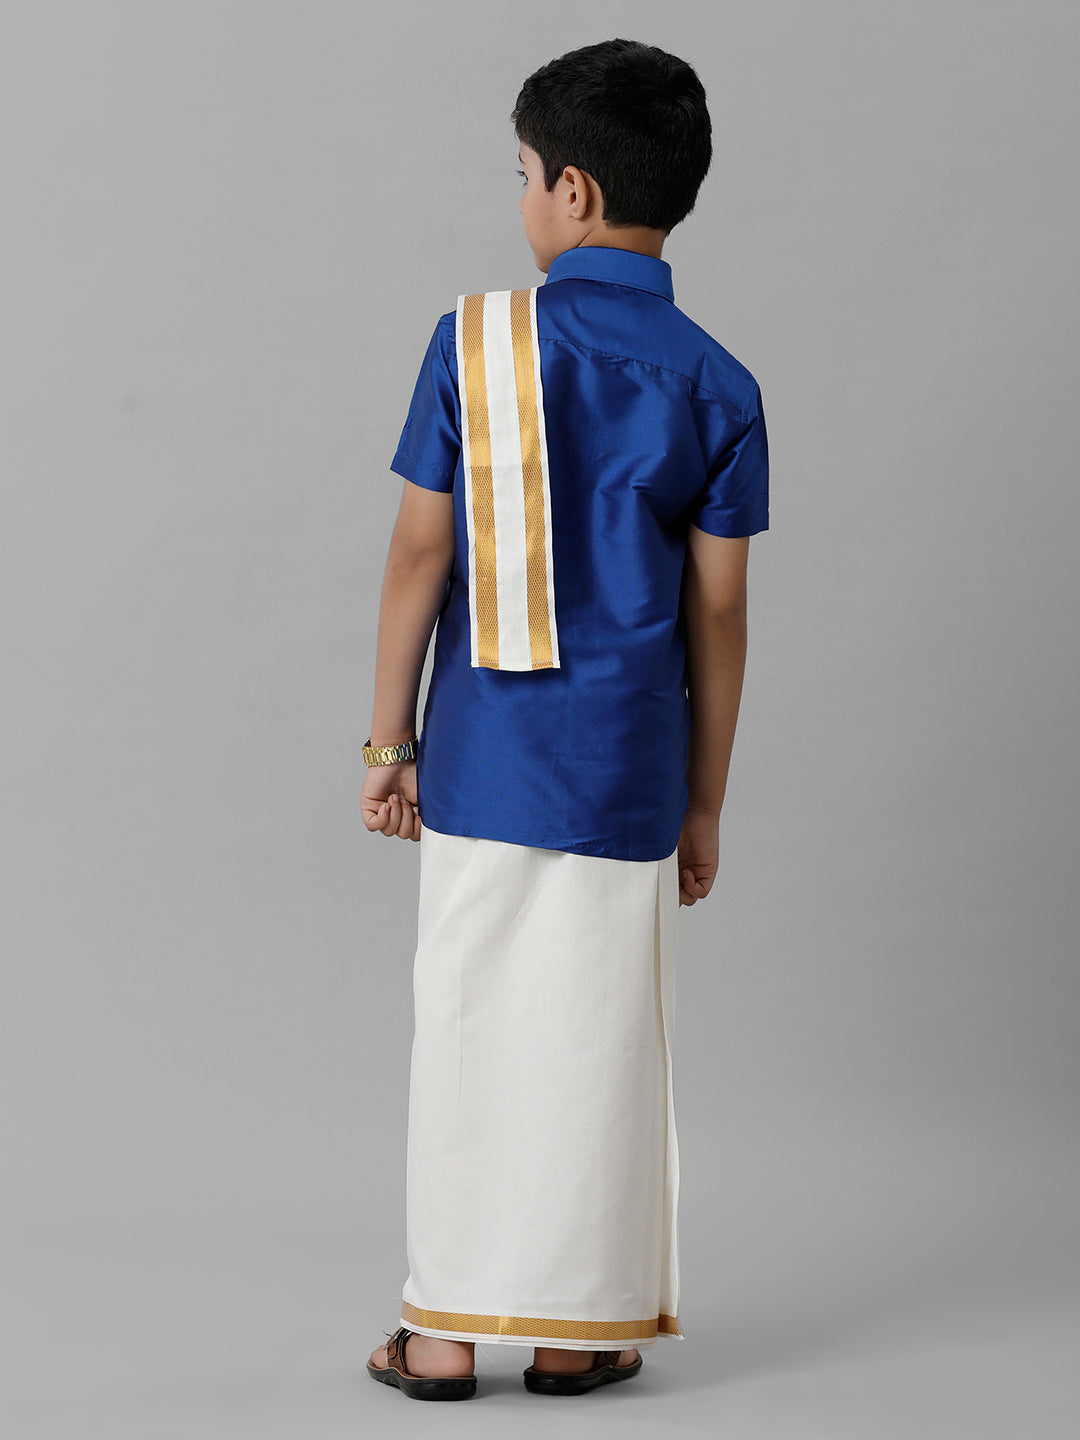 Boys Silk Cotton Blue Half Sleeves Shirt with Adjustable Cream Dhoti Towel Combo K5-Back view